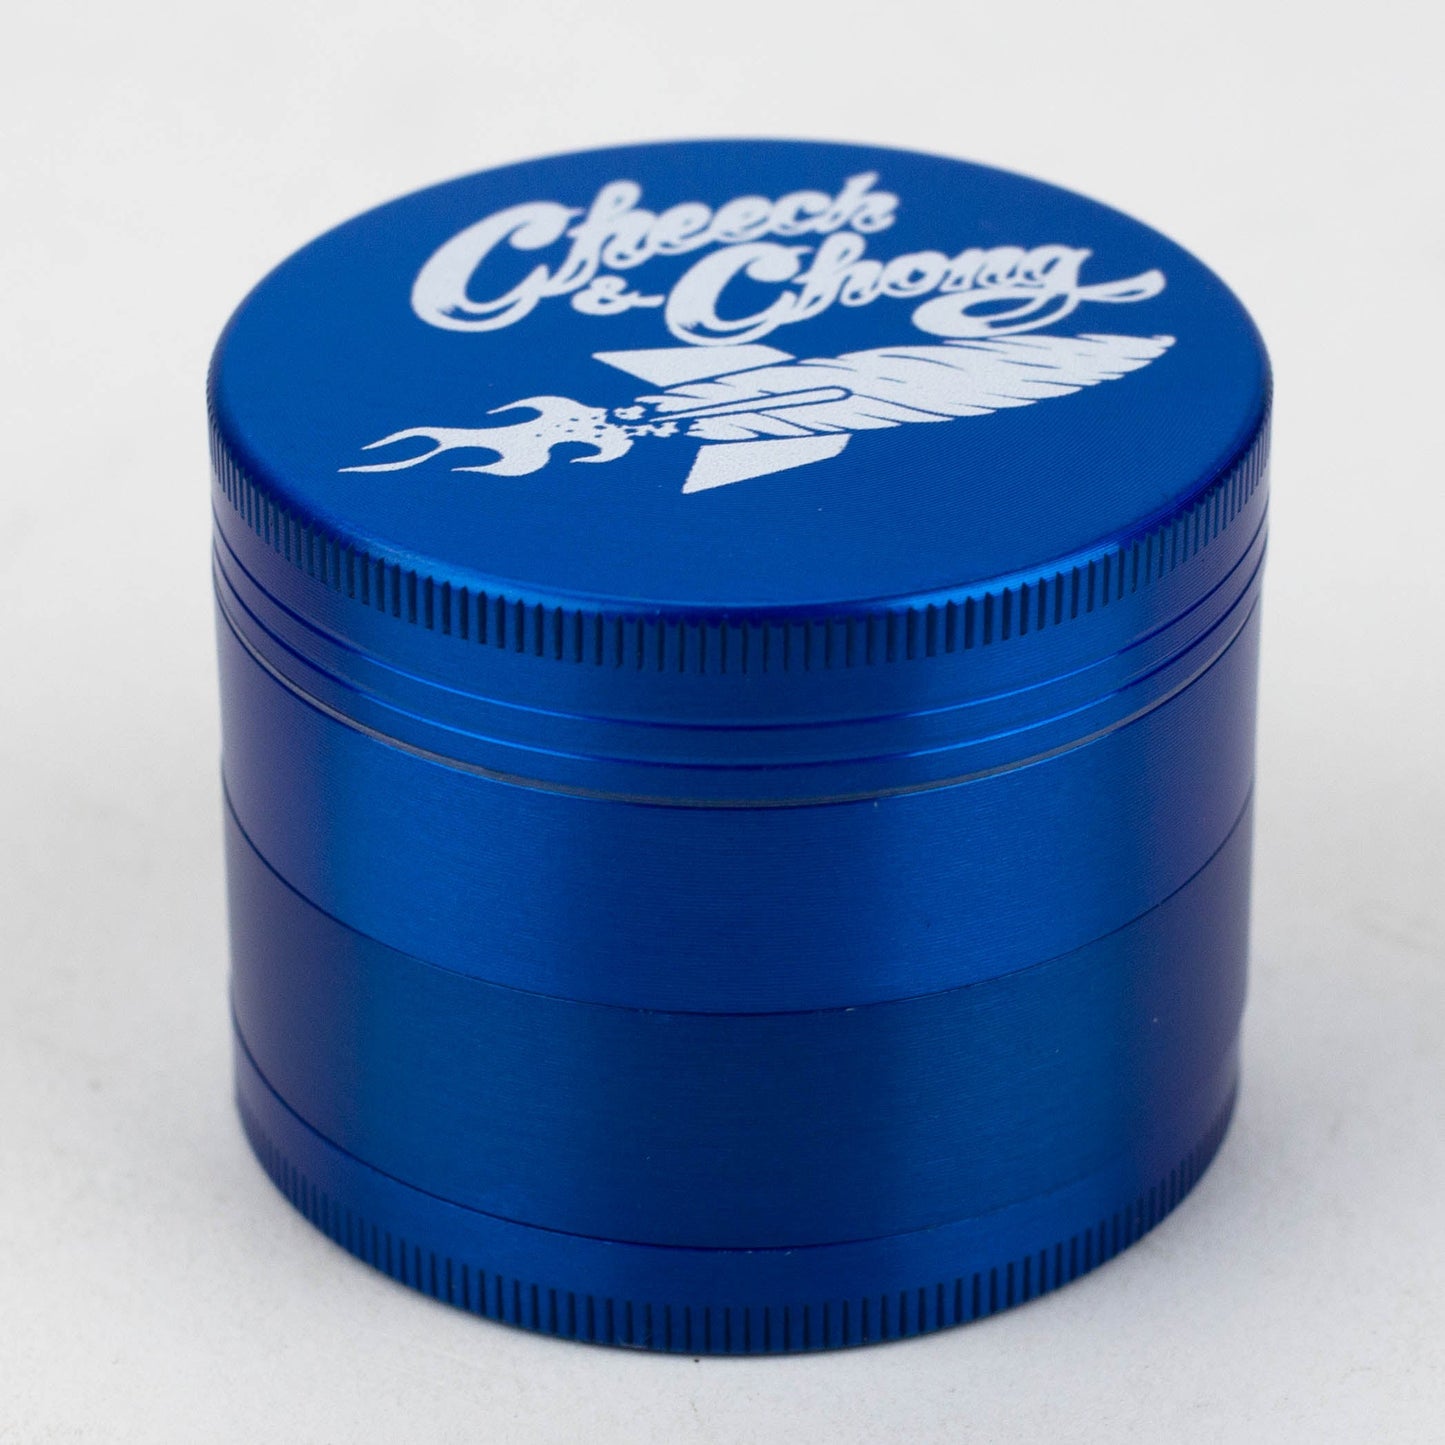 Cheeck & Chong - 4 parts metal grinder by Infyniti_3